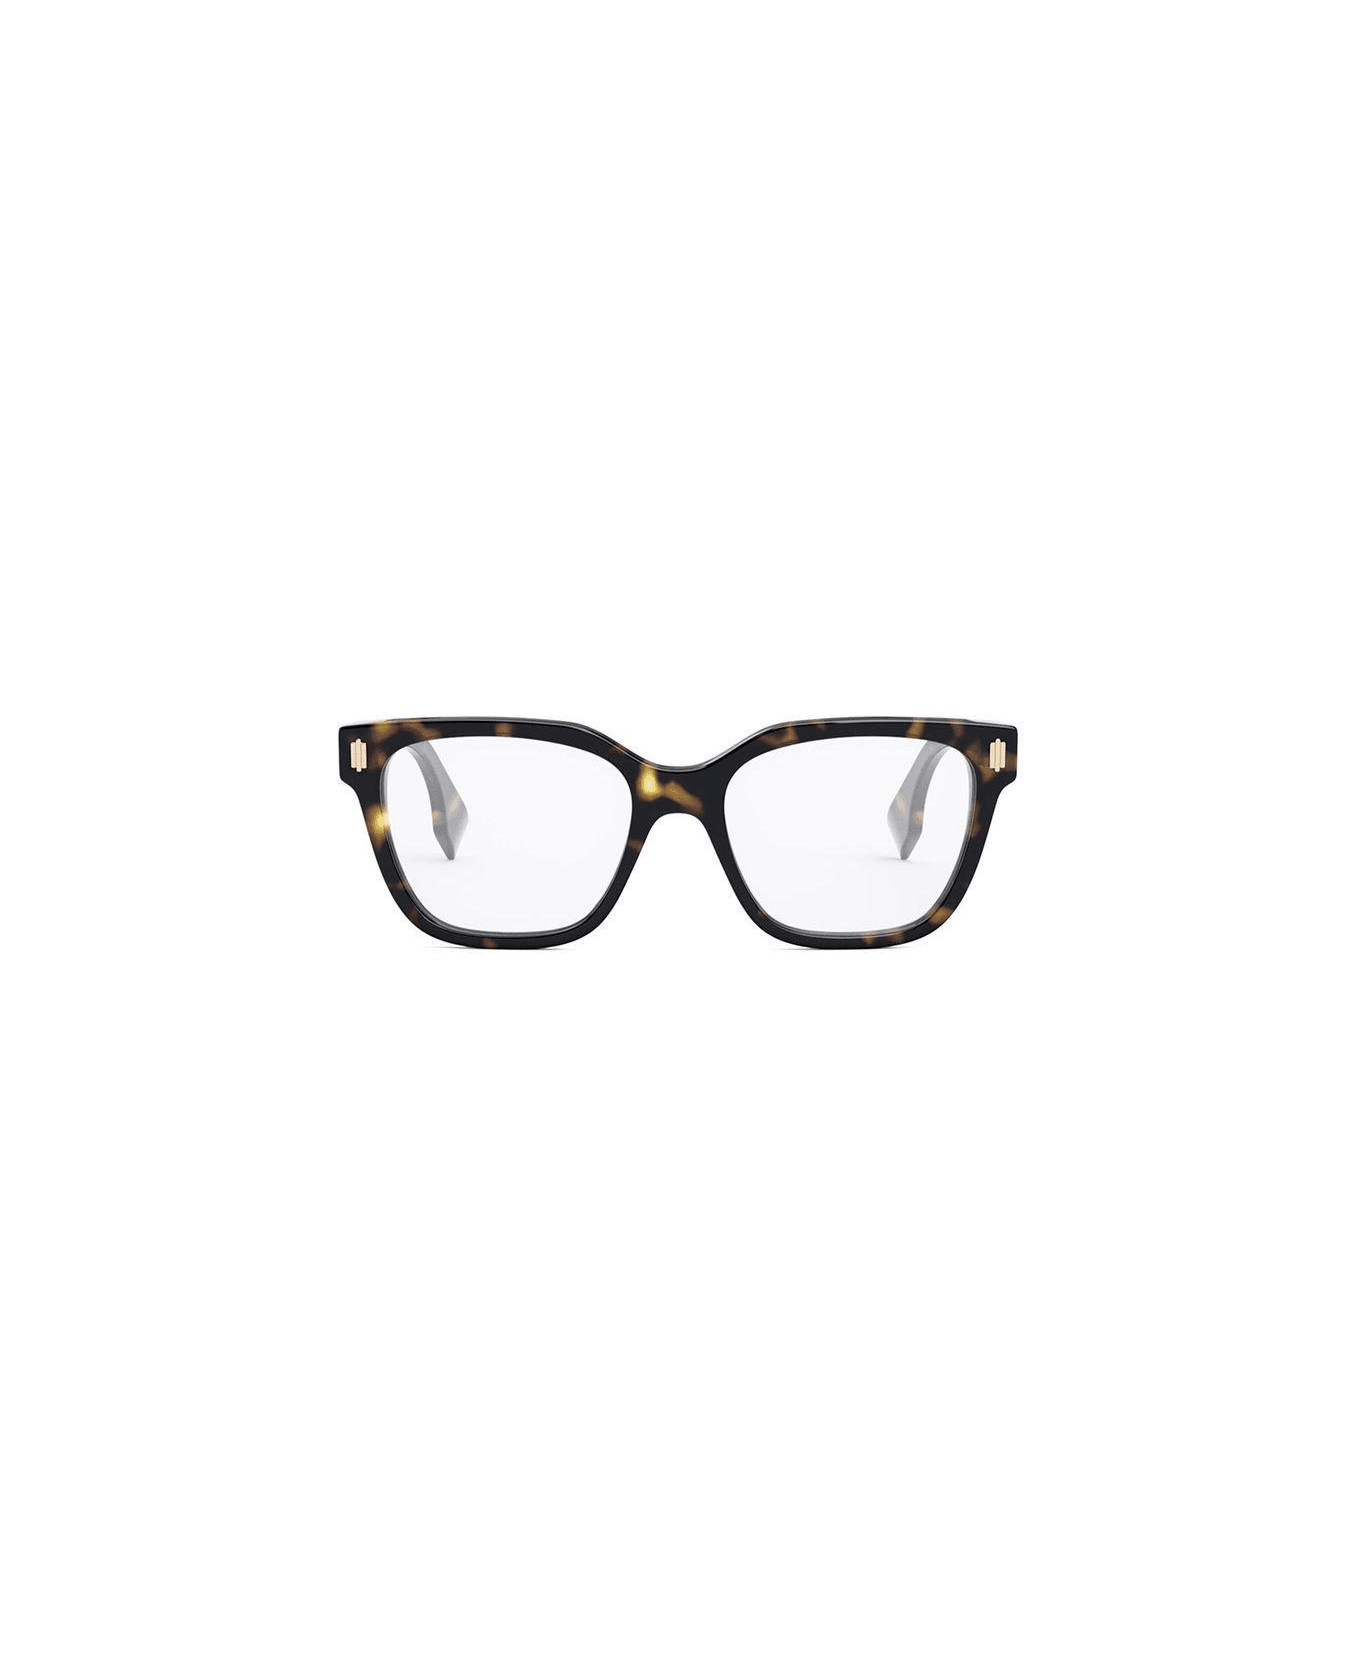 Fendi Eyewear Rectangle Frame Glasses - 052